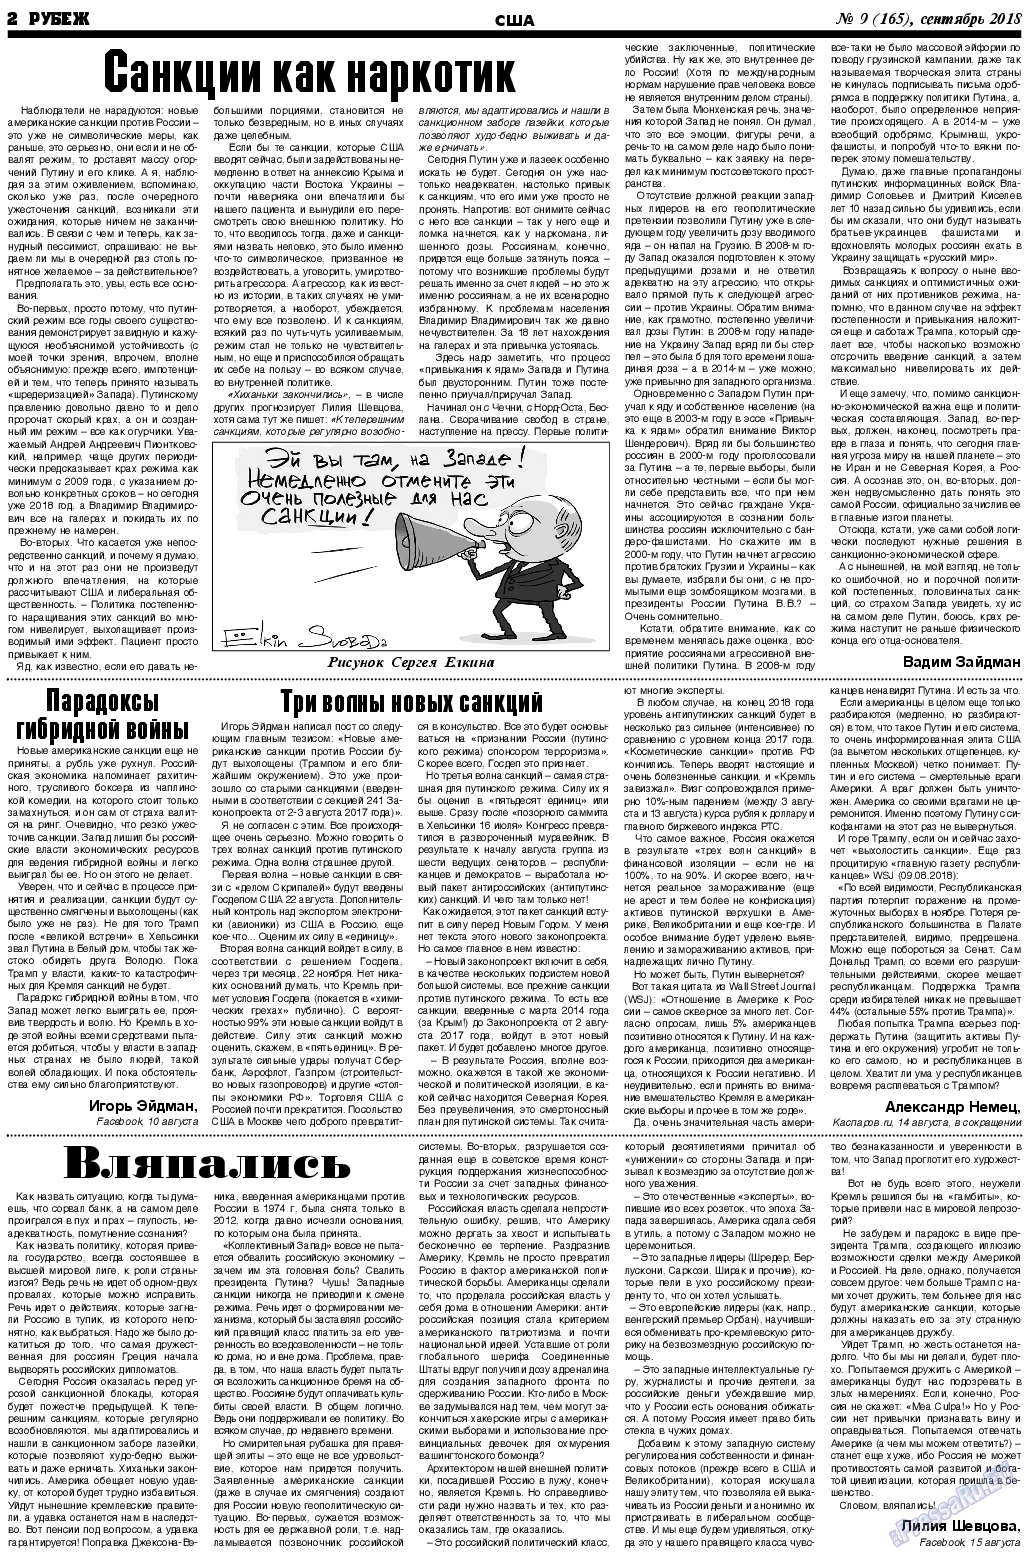 Рубеж, газета. 2018 №9 стр.2